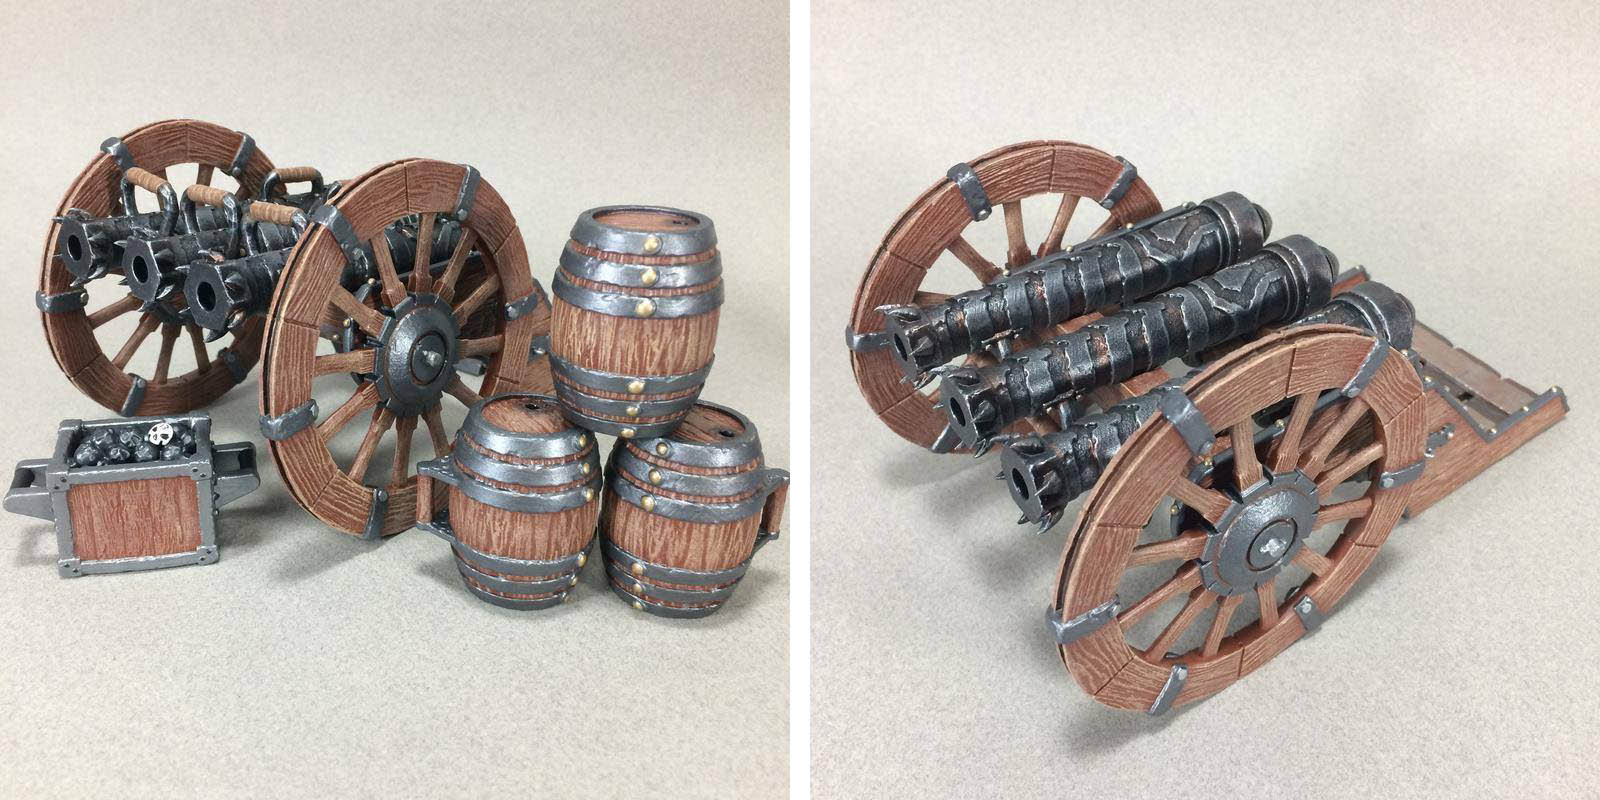 Mythic Legions cannon wagon set from William Robert Post / MyActionFigureCustoms